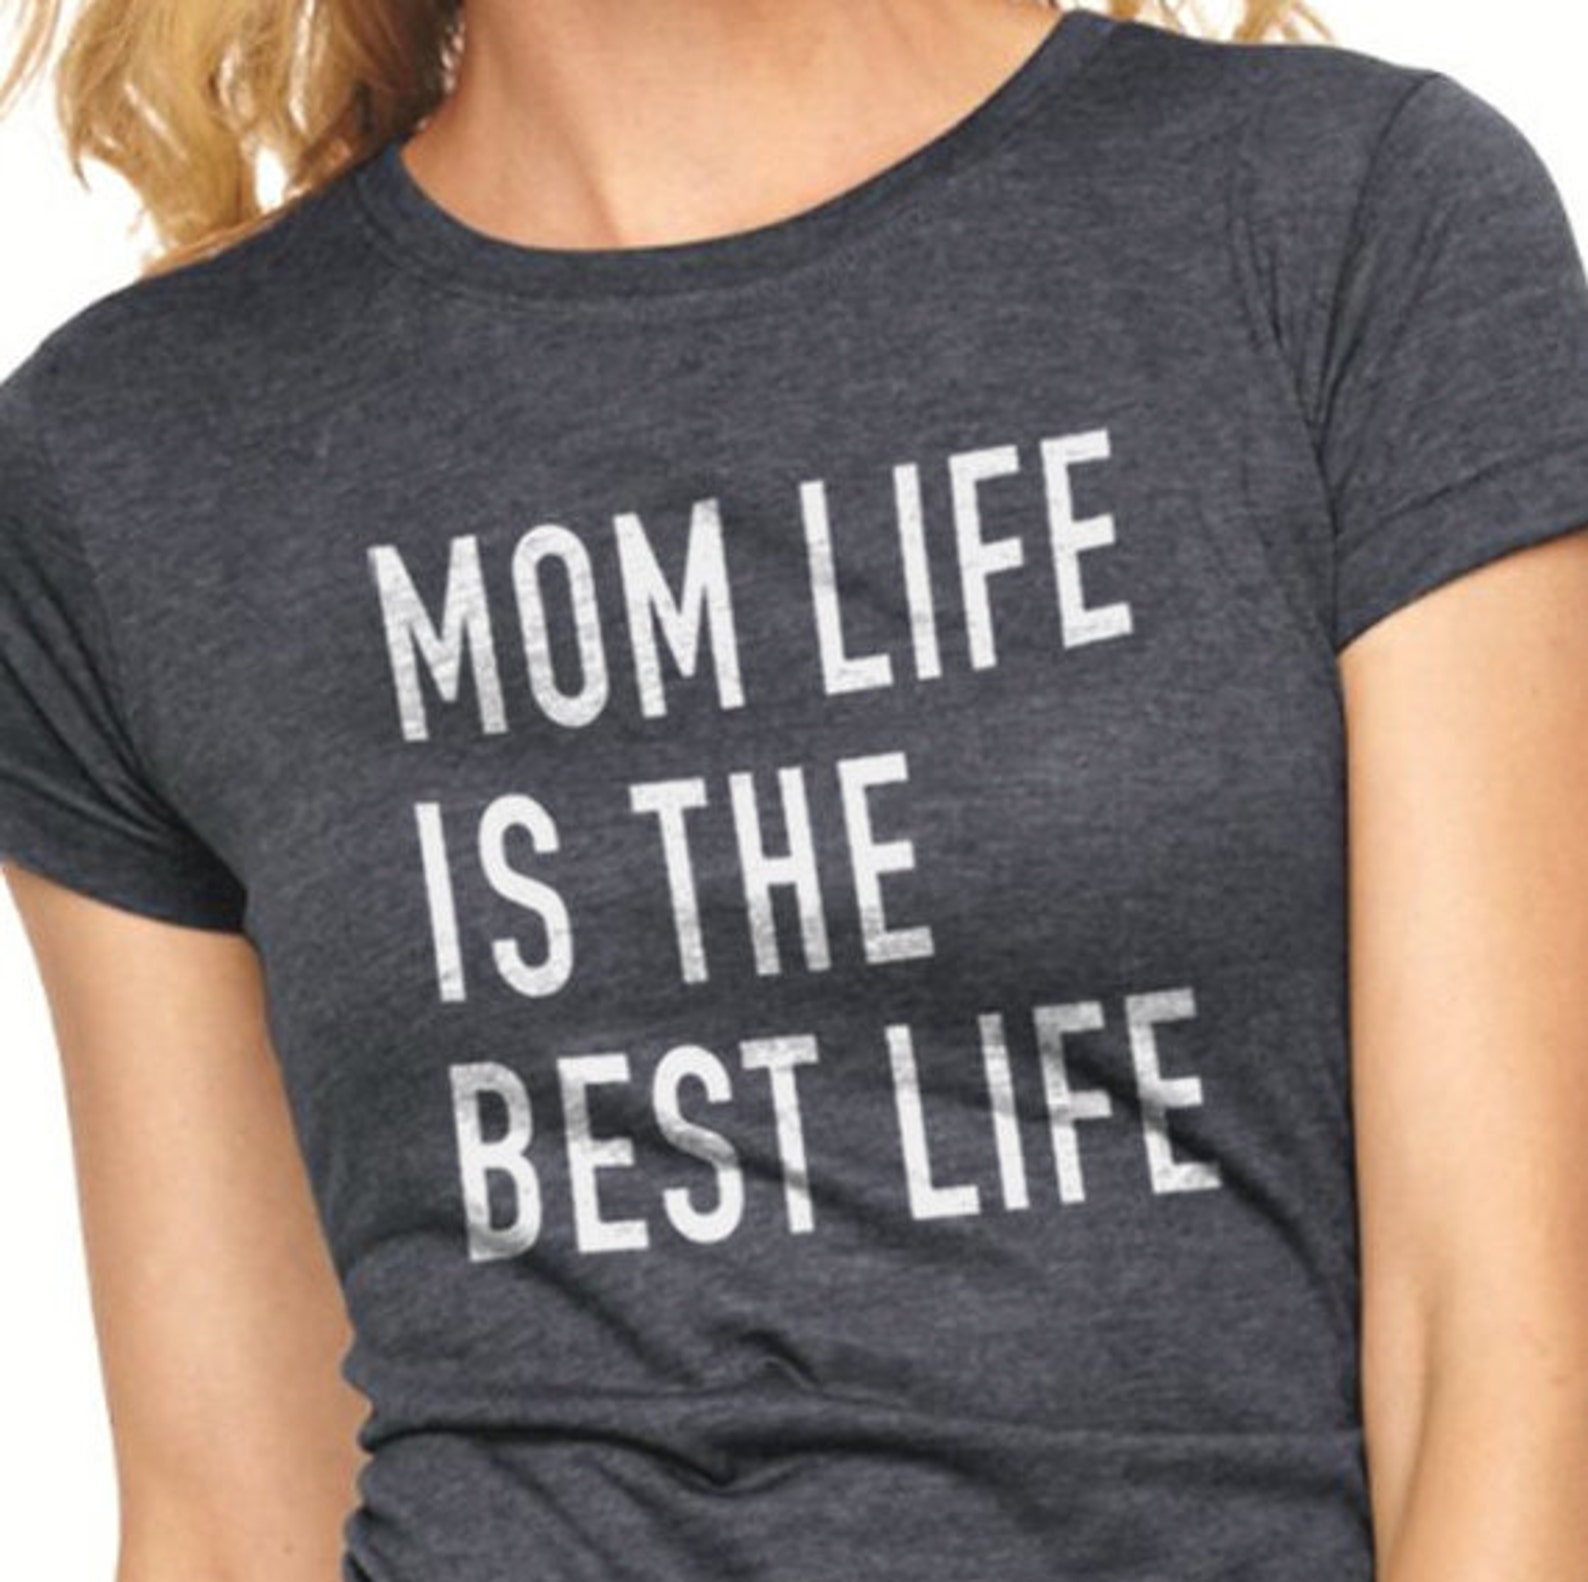 Мом лайф. Mom Life. Женская футболка #mam the best. Mom Life is the best. Life is better футболка серая.